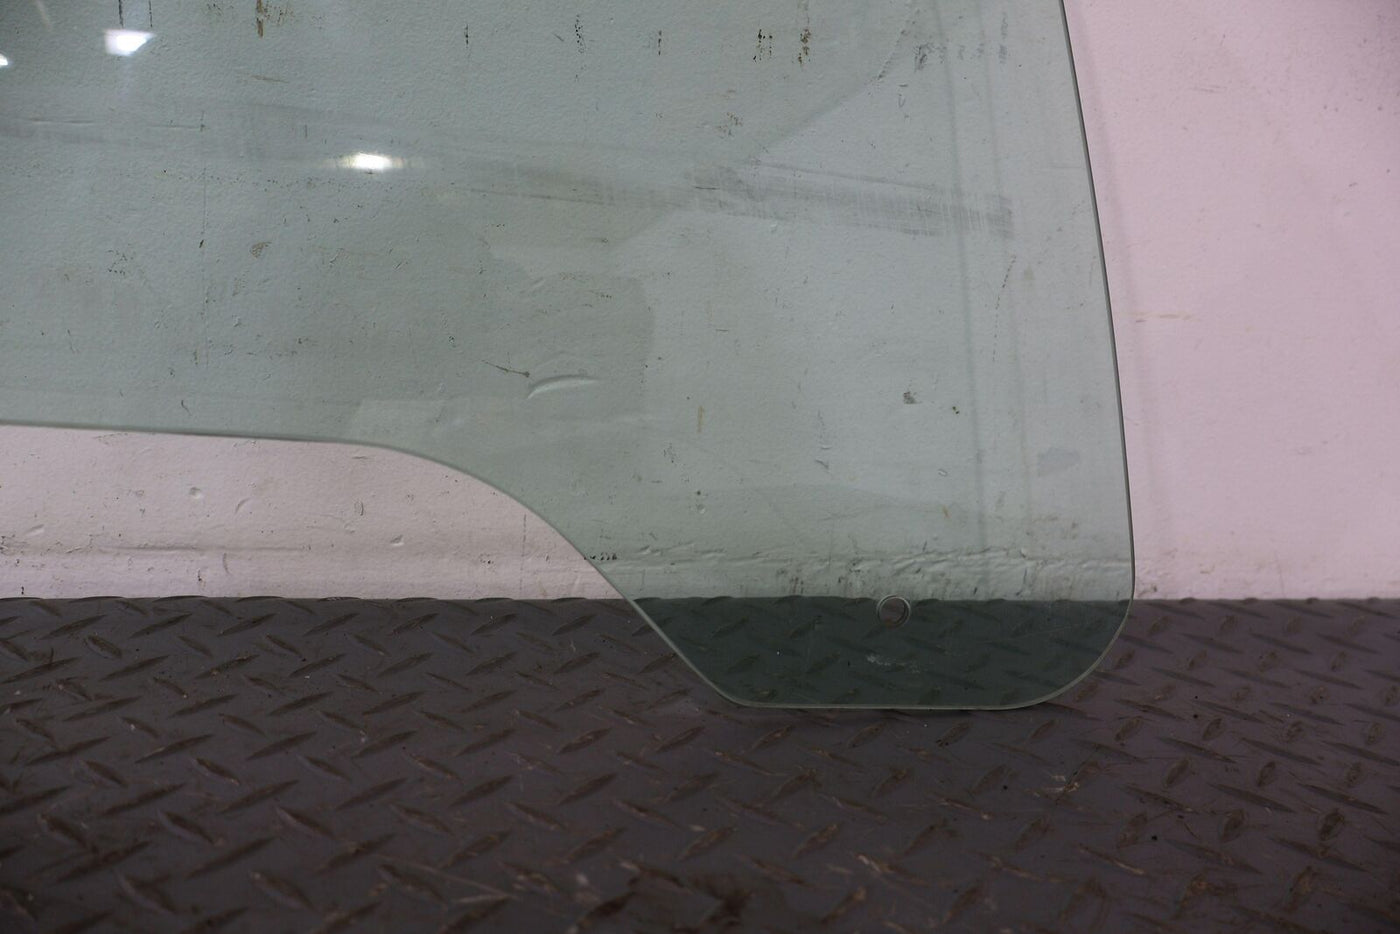 02-05 Ford Thunderbird Right RH Passenger Door Window Glass (Glass Only) OEM